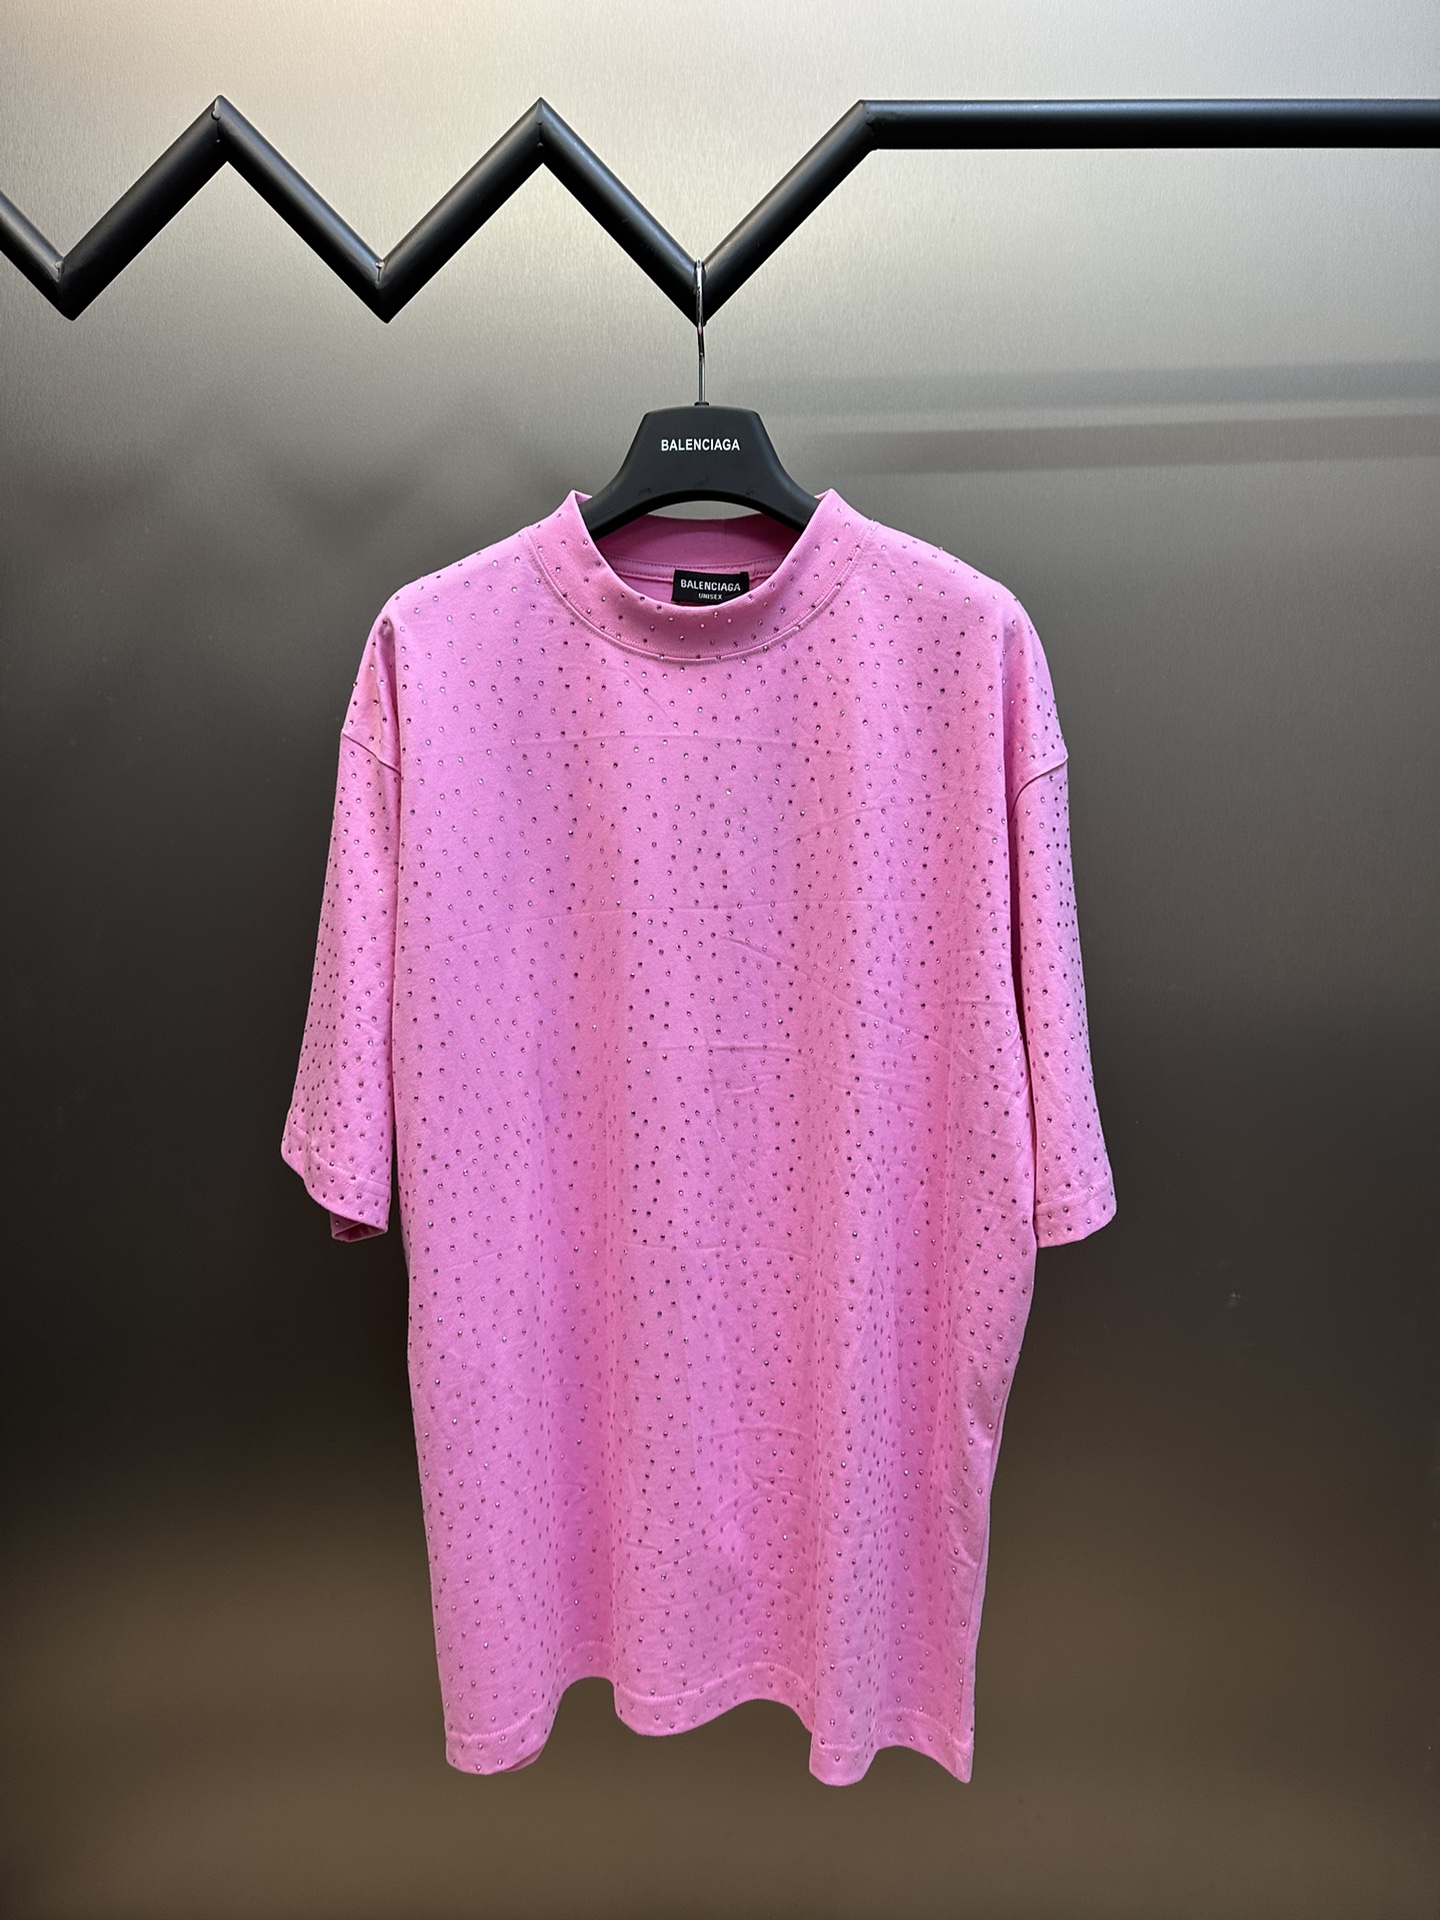 Balenciaga Clothing T-Shirt Replica 1:1 High Quality
 Pink Spring Collection Short Sleeve